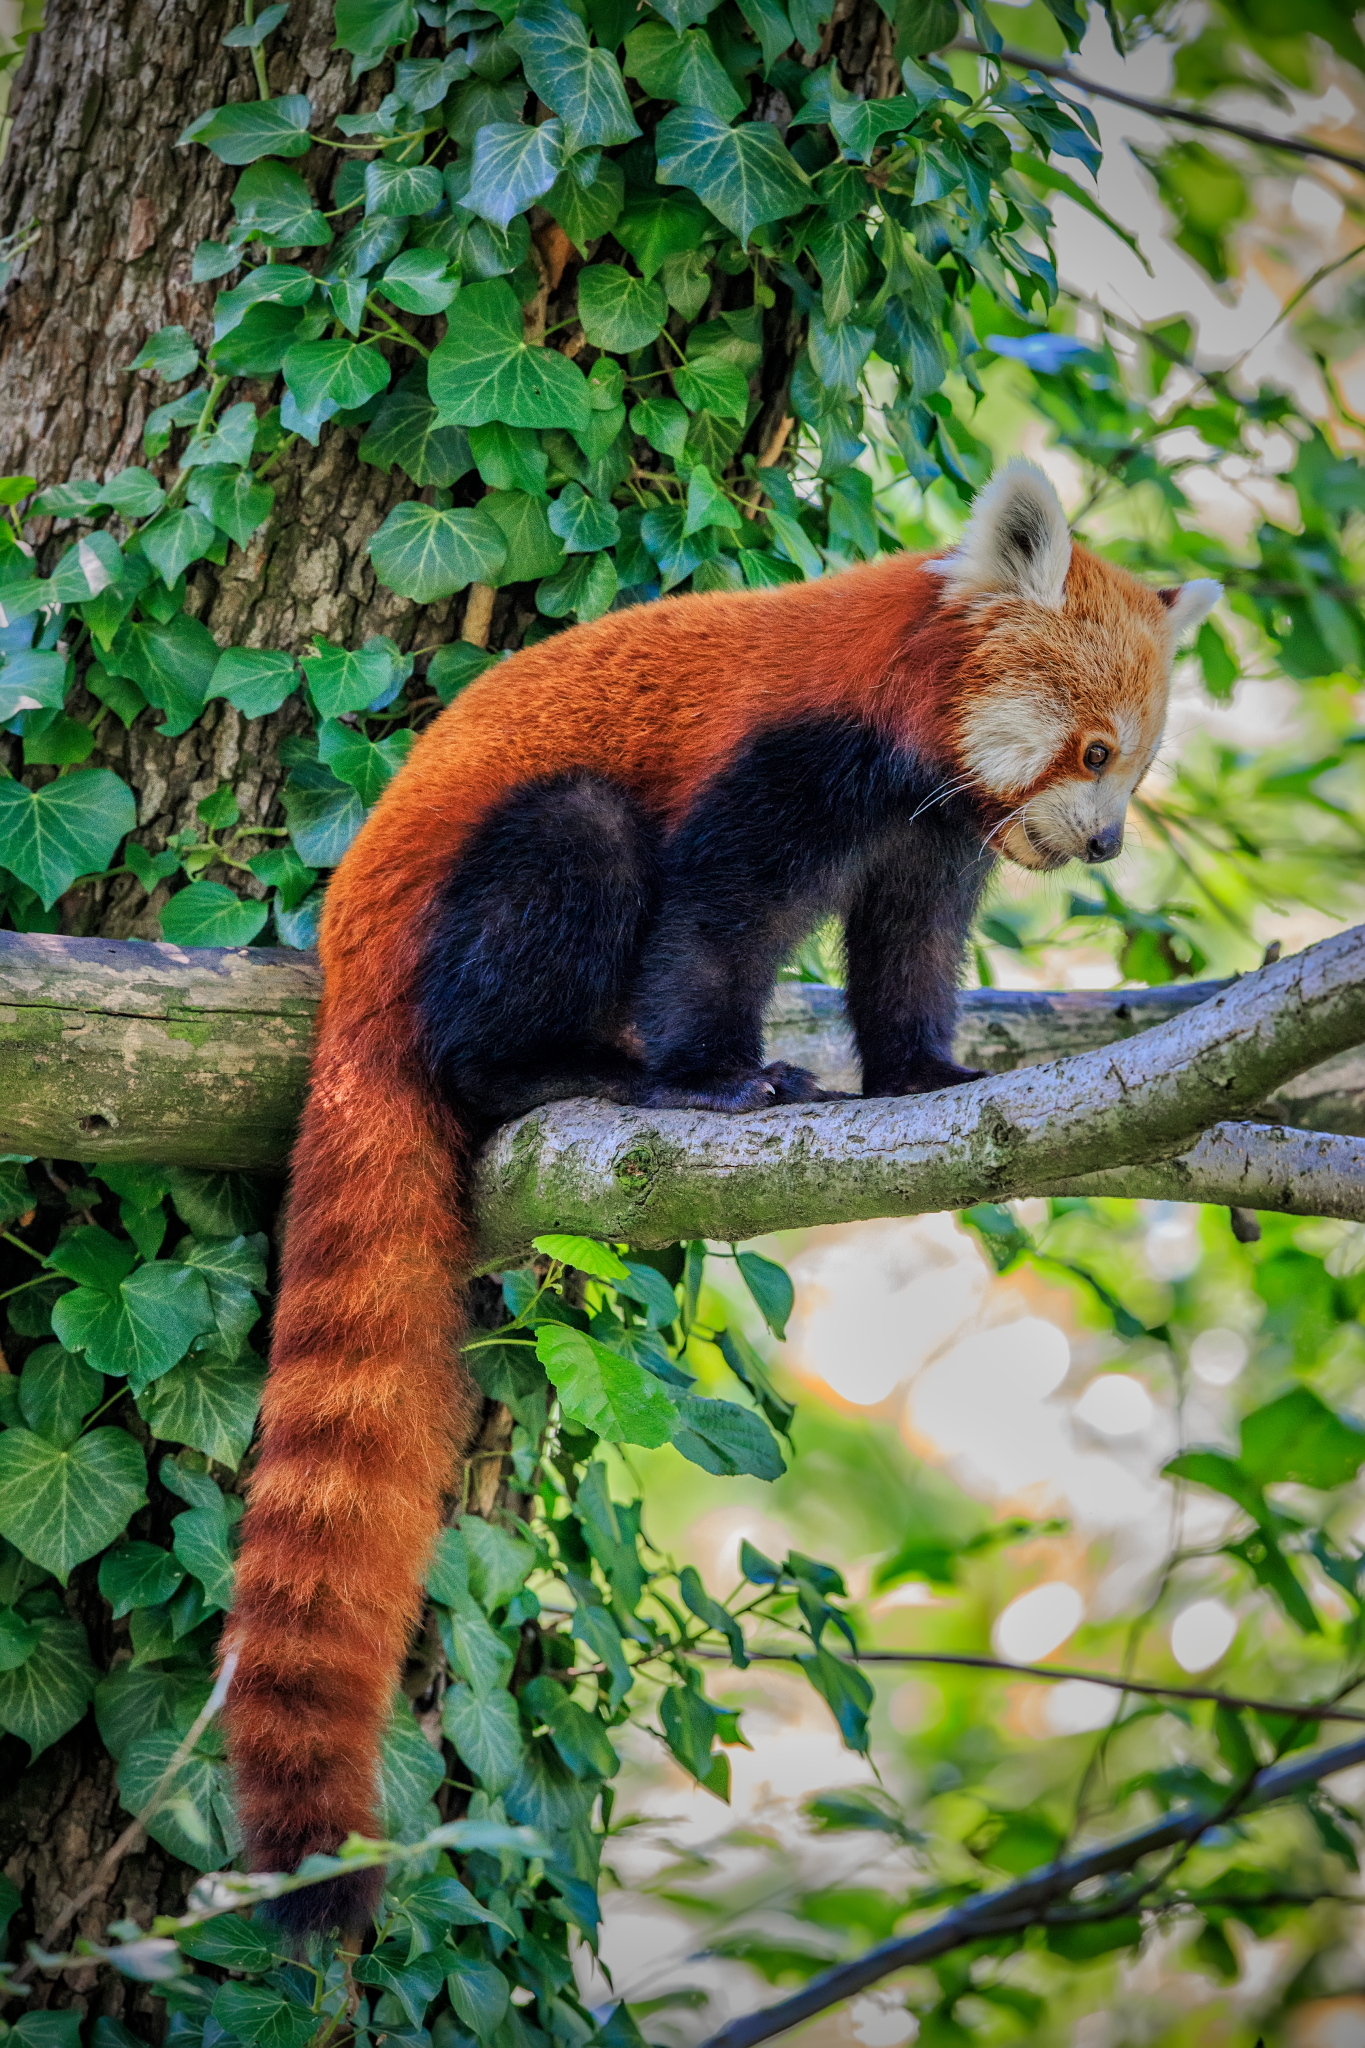 Panda rosso o minore (firefox)...